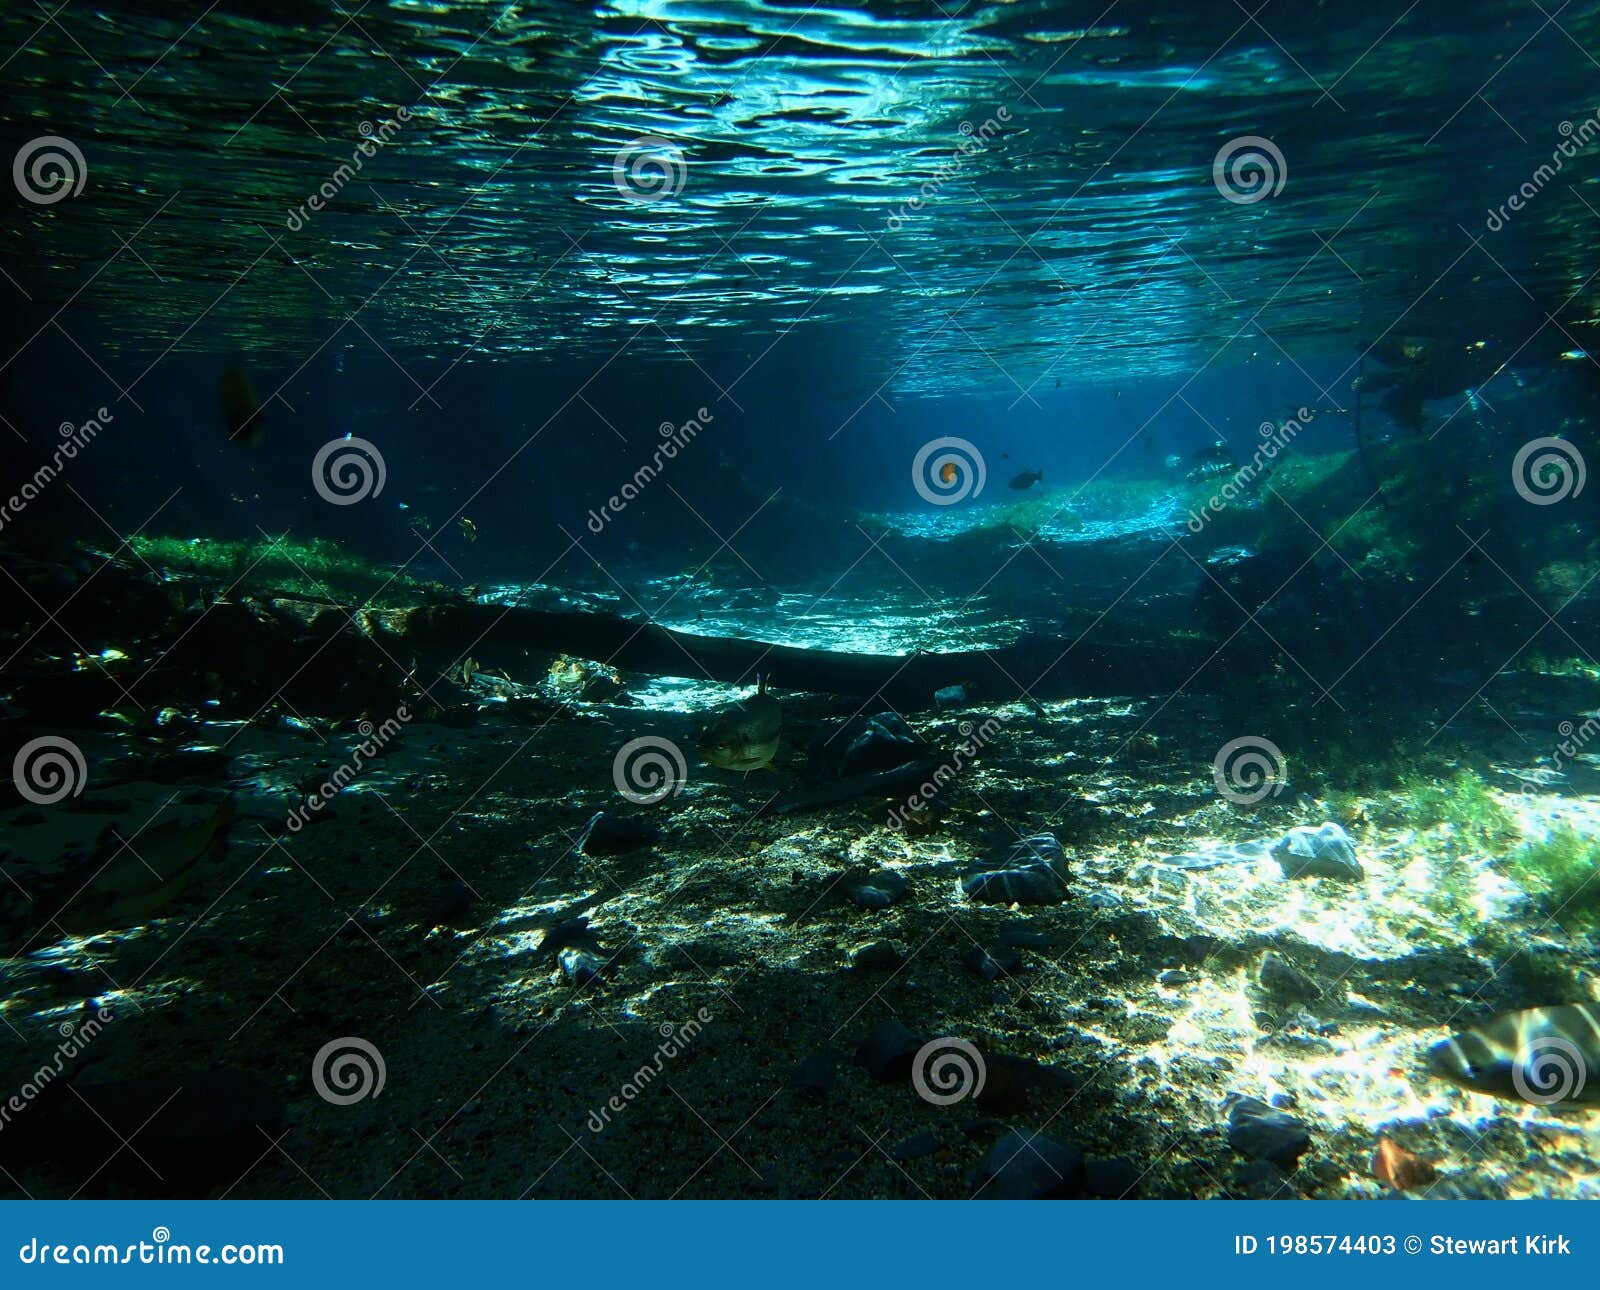 underwater view of rio triste